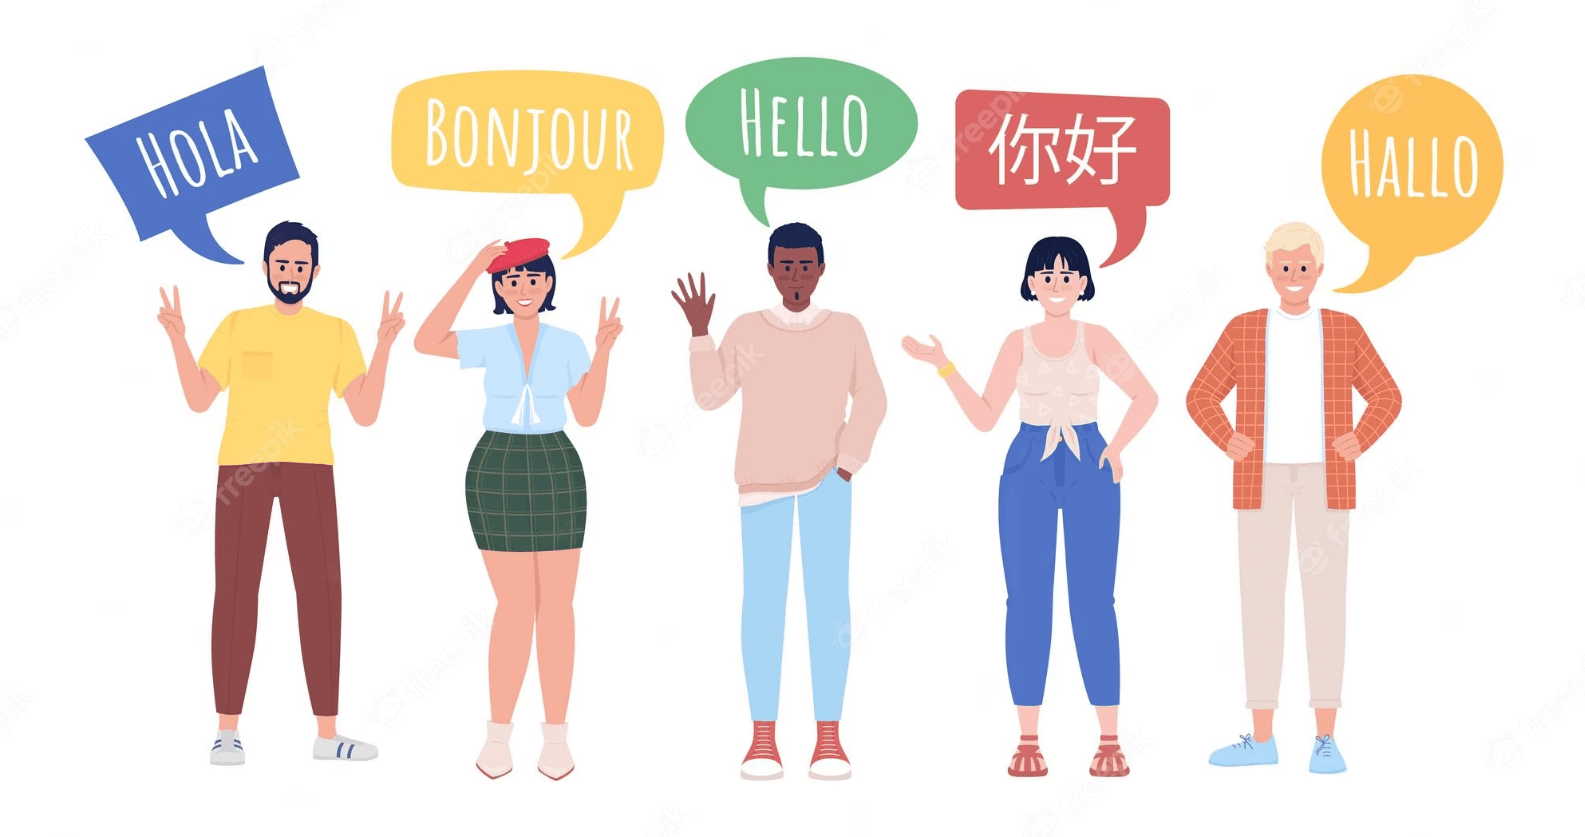 Multilingual language options